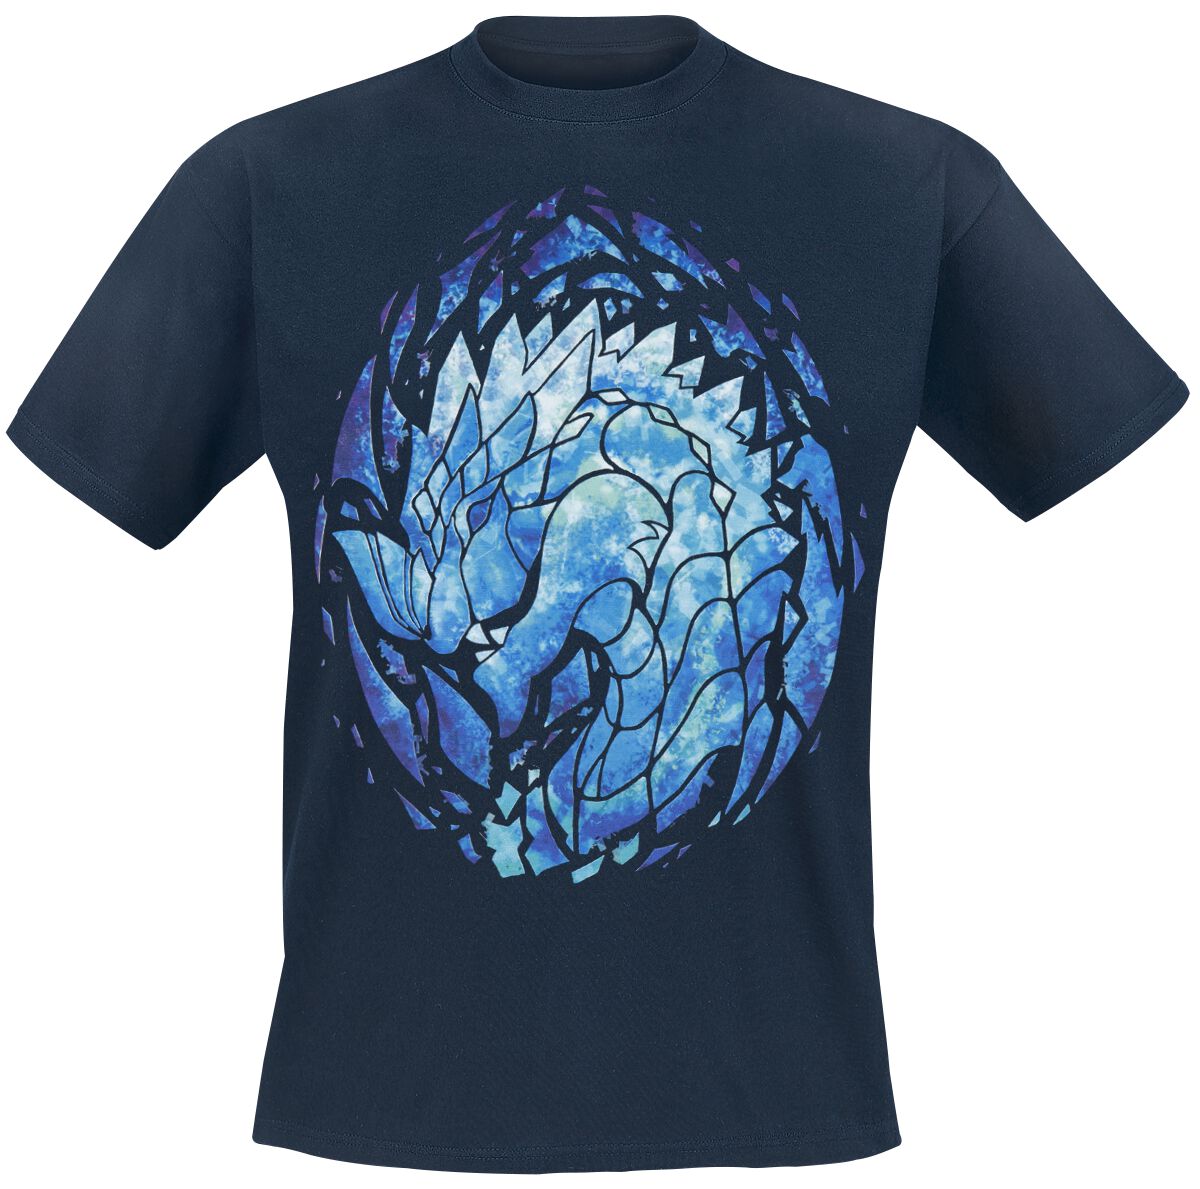 Guild Wars Her Name Is Aurene by Buttersphere T-Shirt dark blue